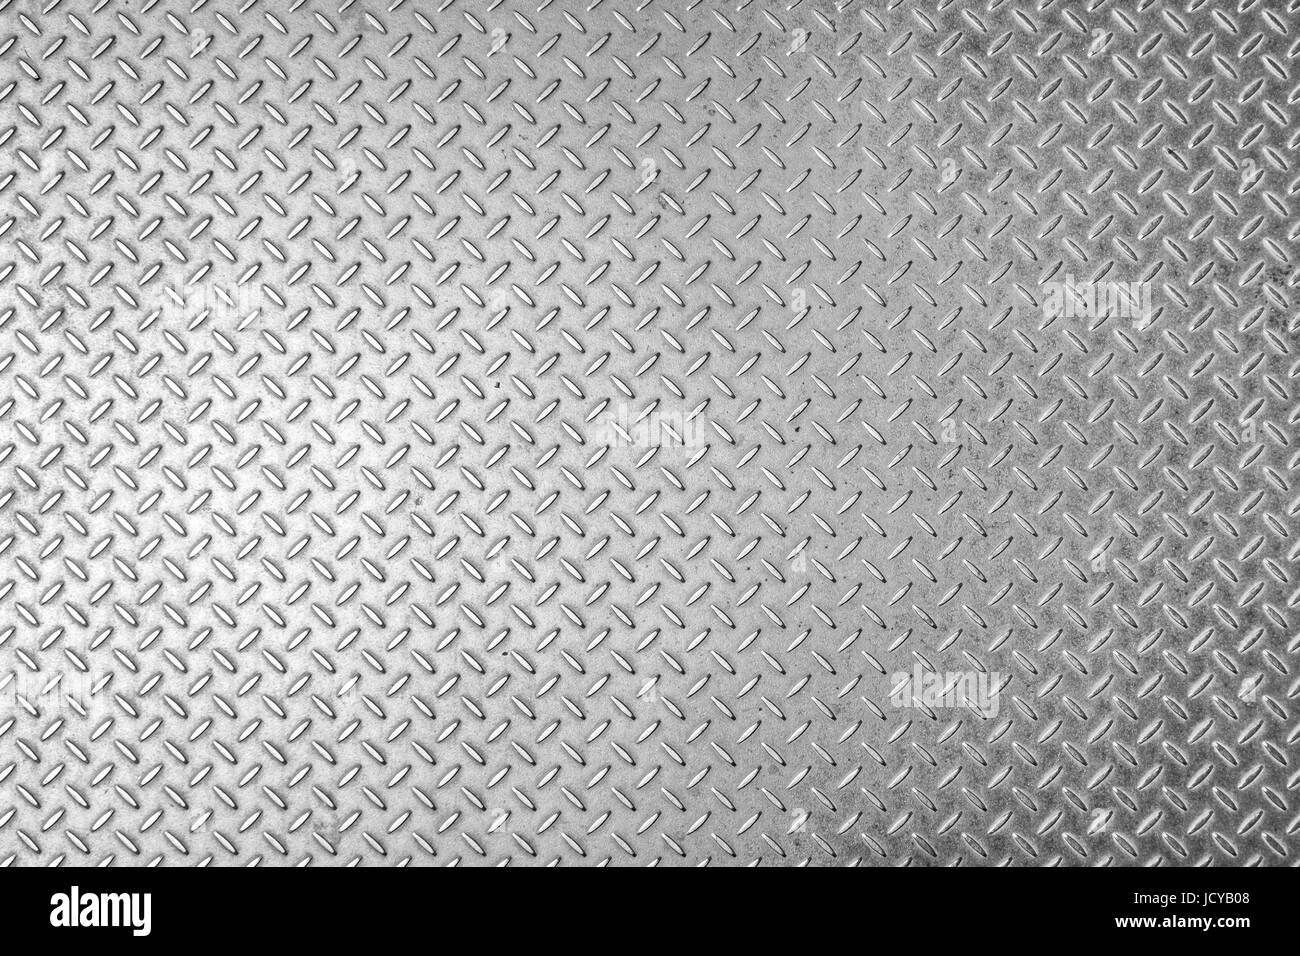 metal floor background  - metallic pattern texture Stock Photo